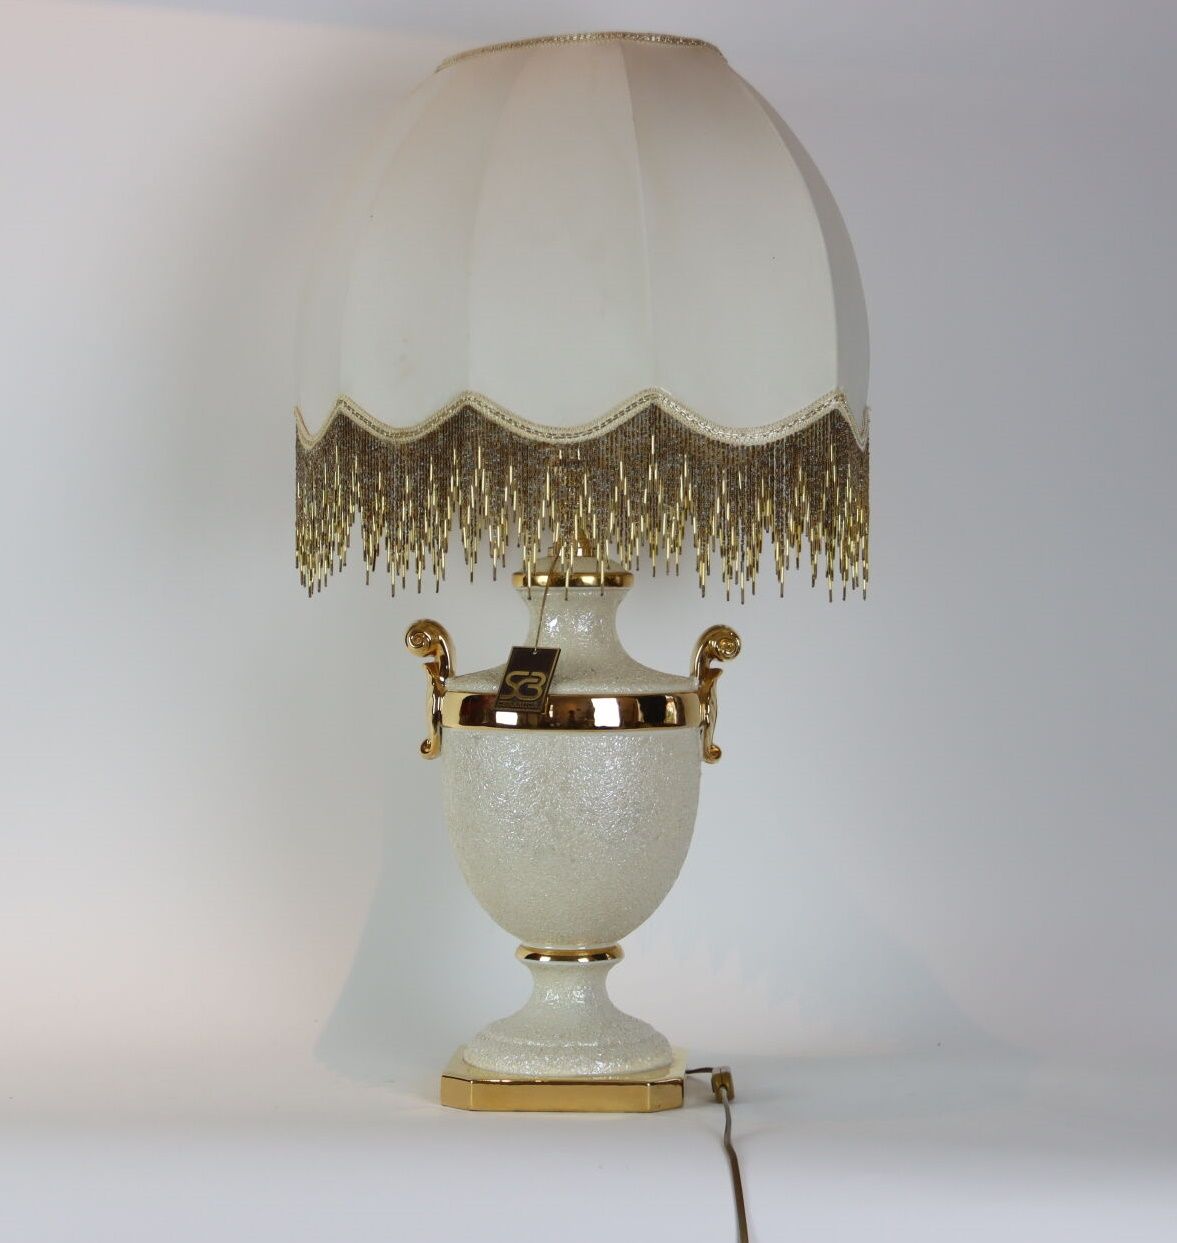 Null 一个美第奇形陶瓷花瓶，金色的亮点构成了一盏灯。高度：60 厘米